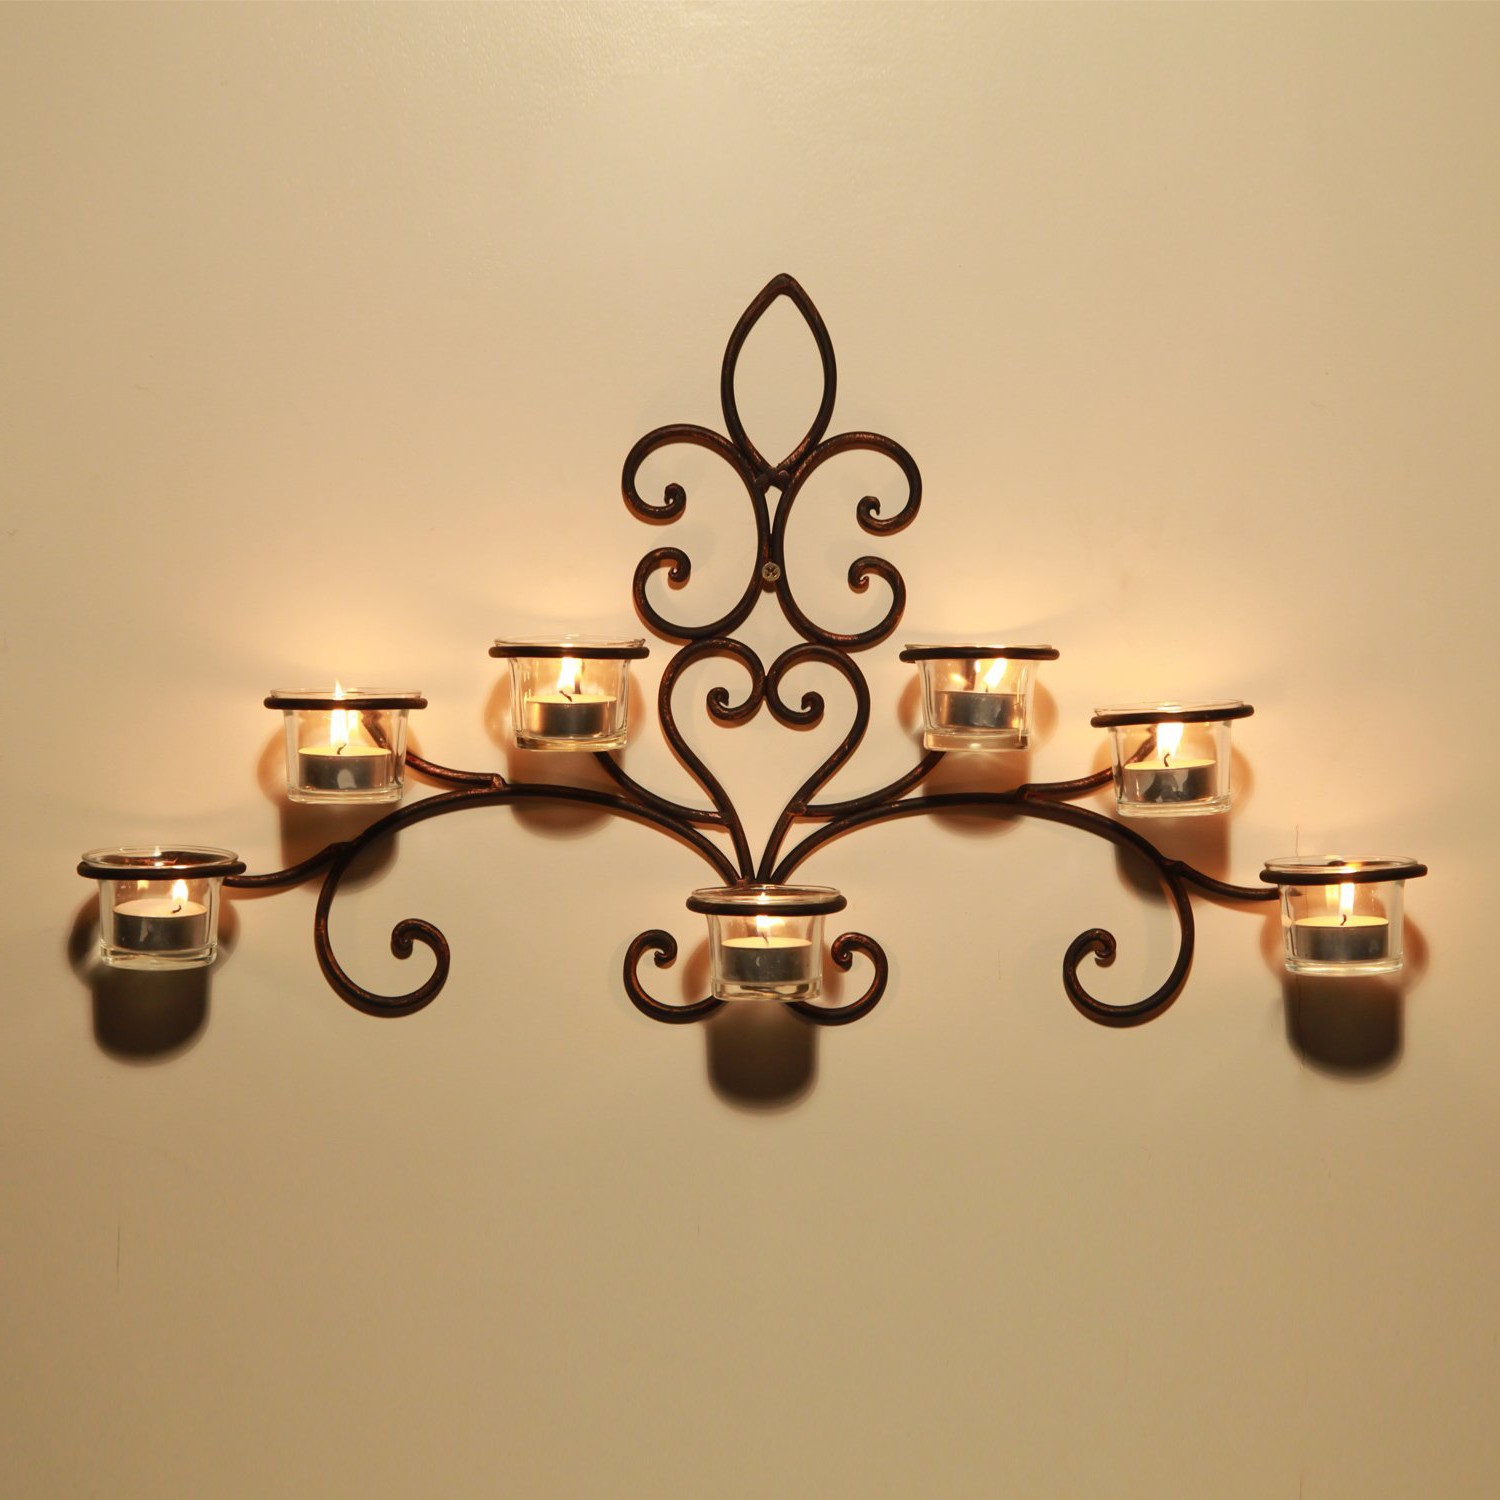 Sconce : Global Inspired Home Design Interior Lighting 2 Lights ...